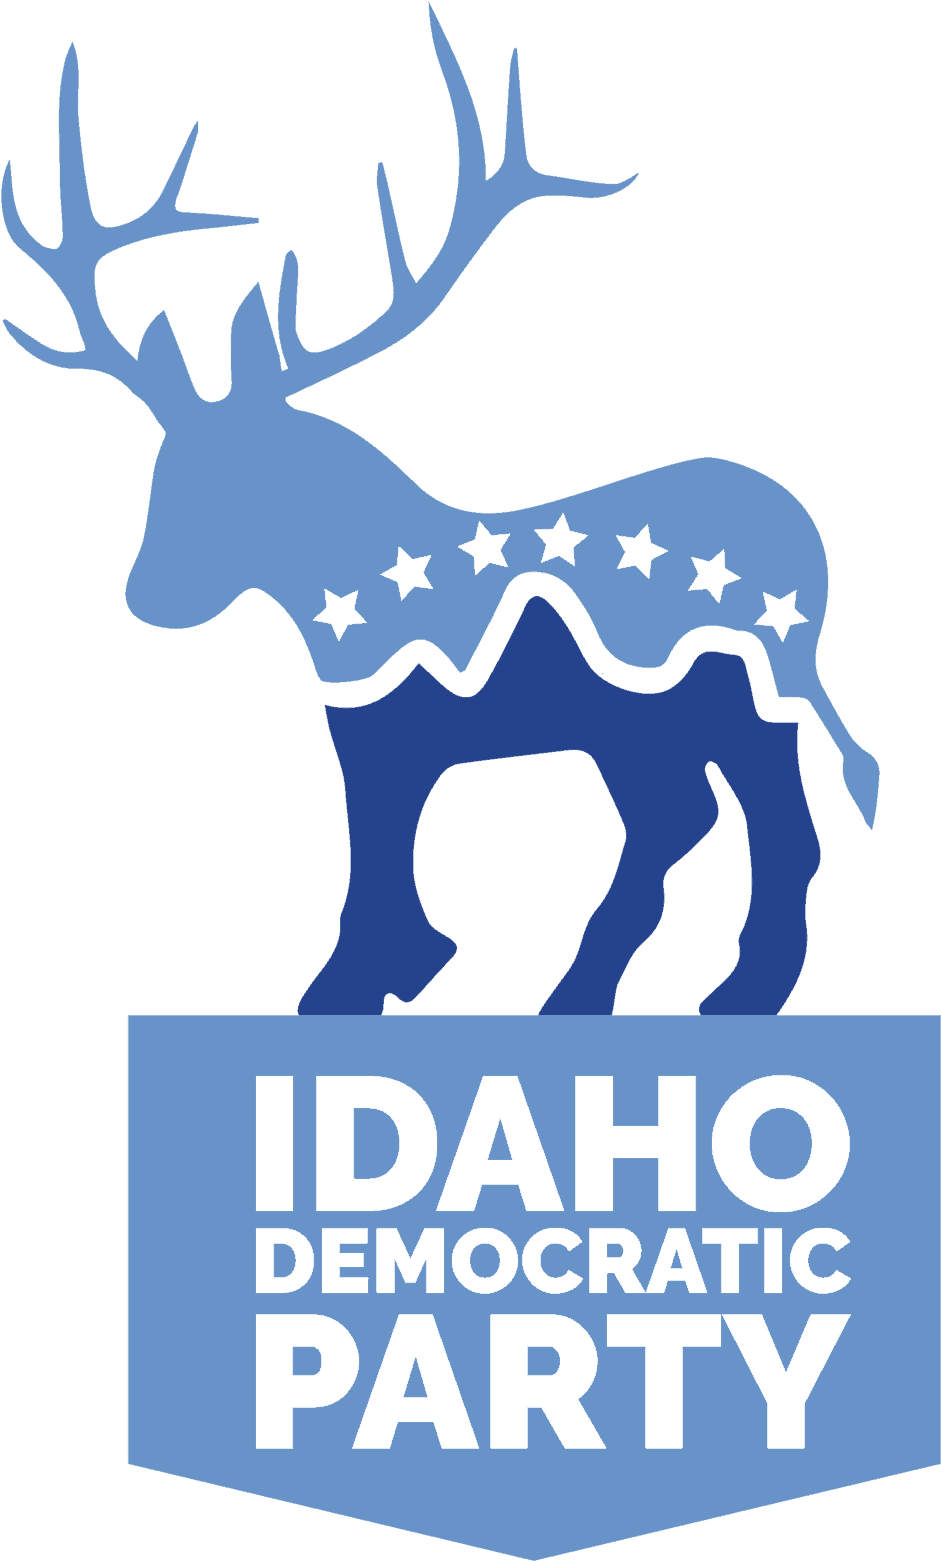 View Larger Image Idaho Democratic Party